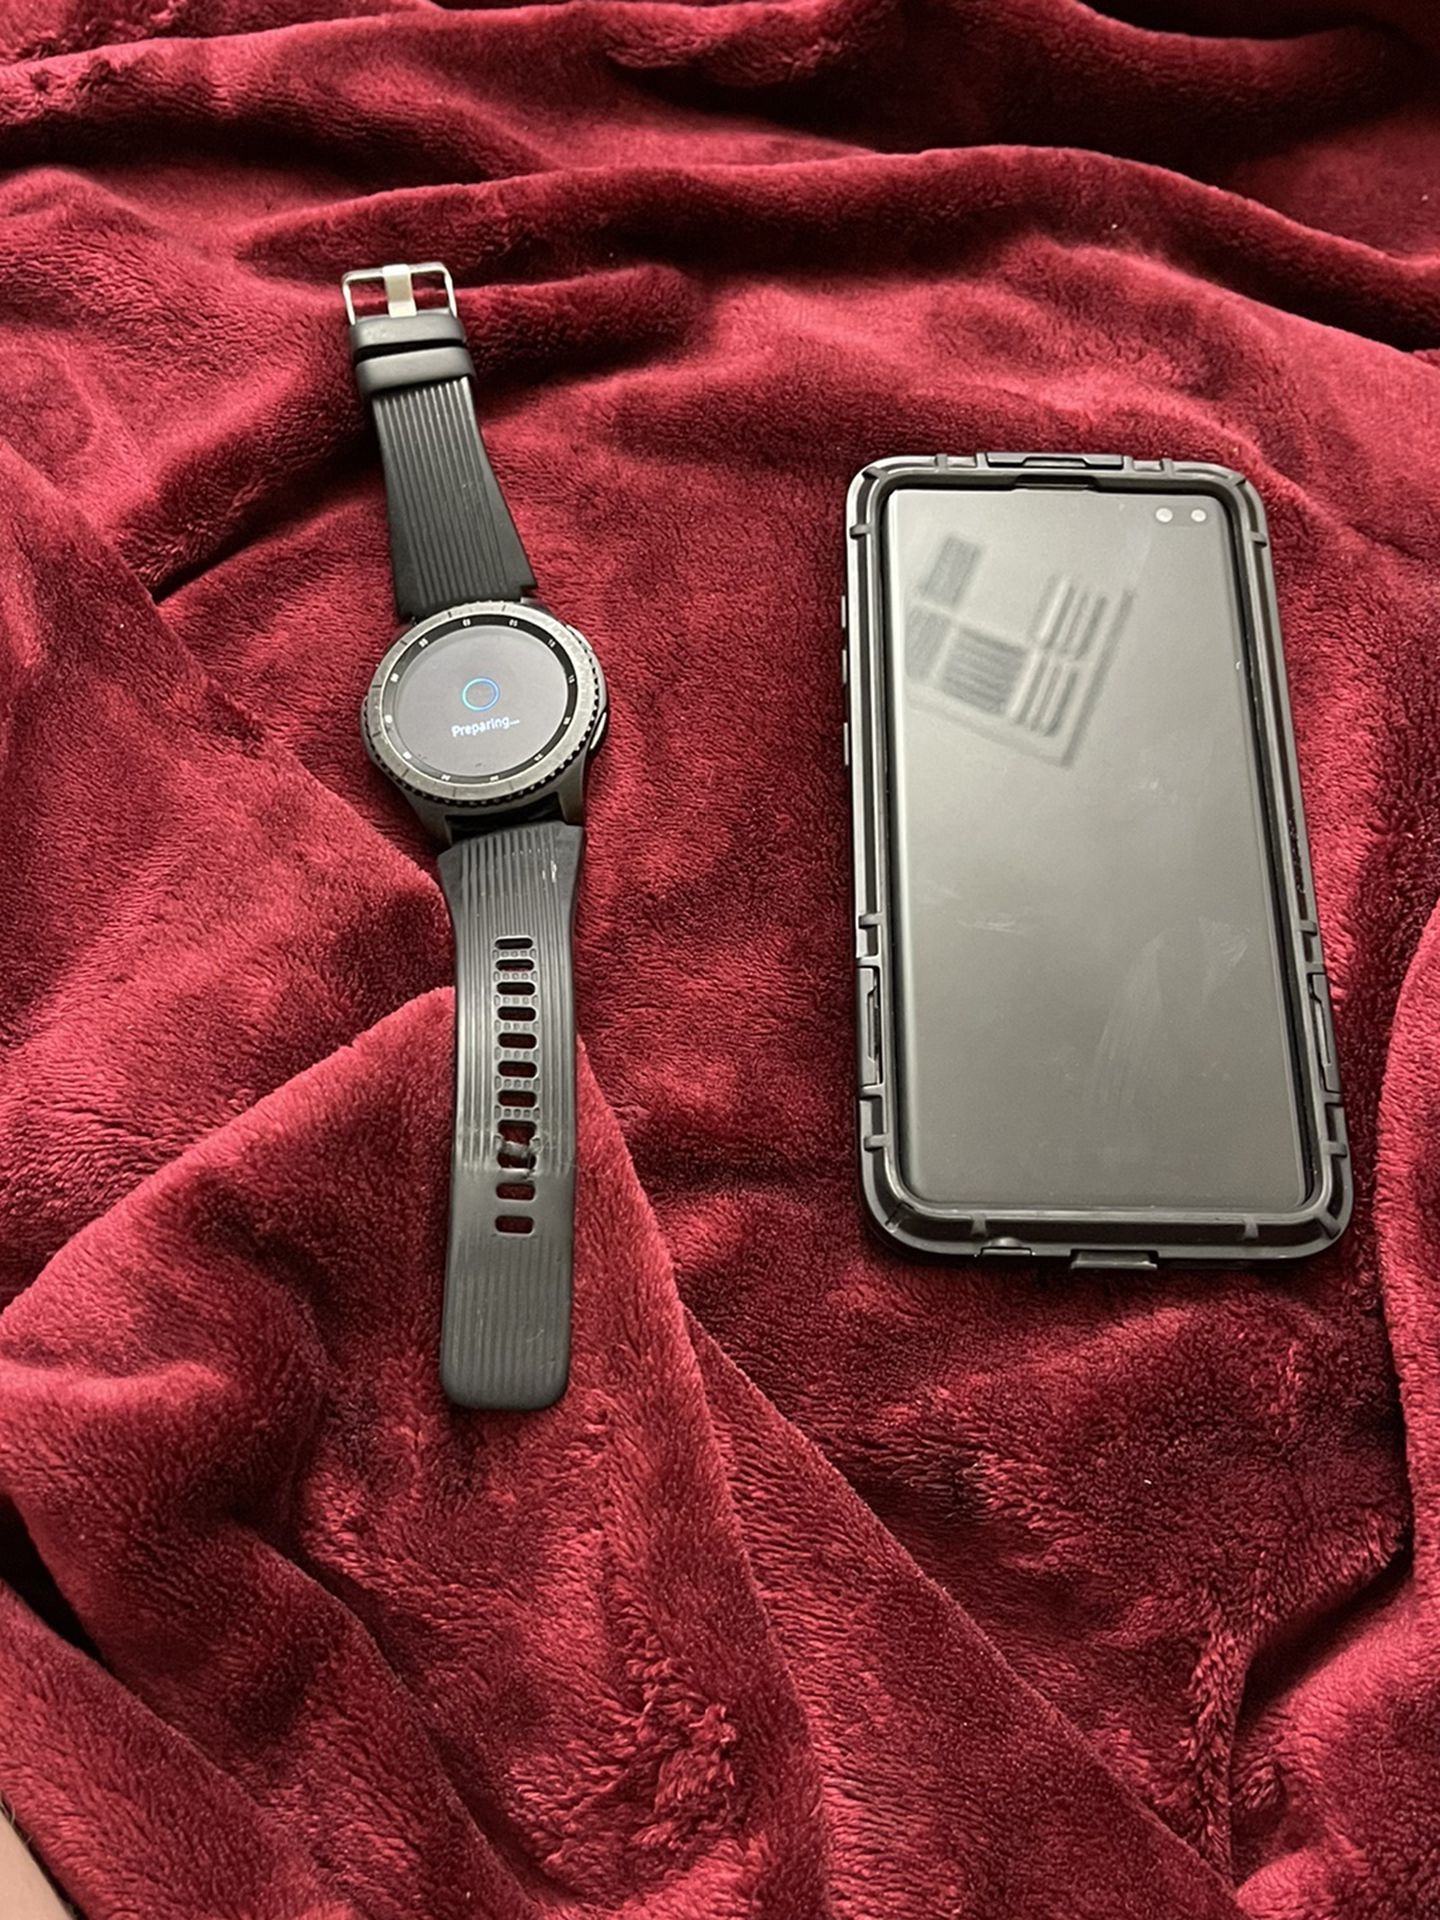 Samsung Galaxy S10+ And Watch